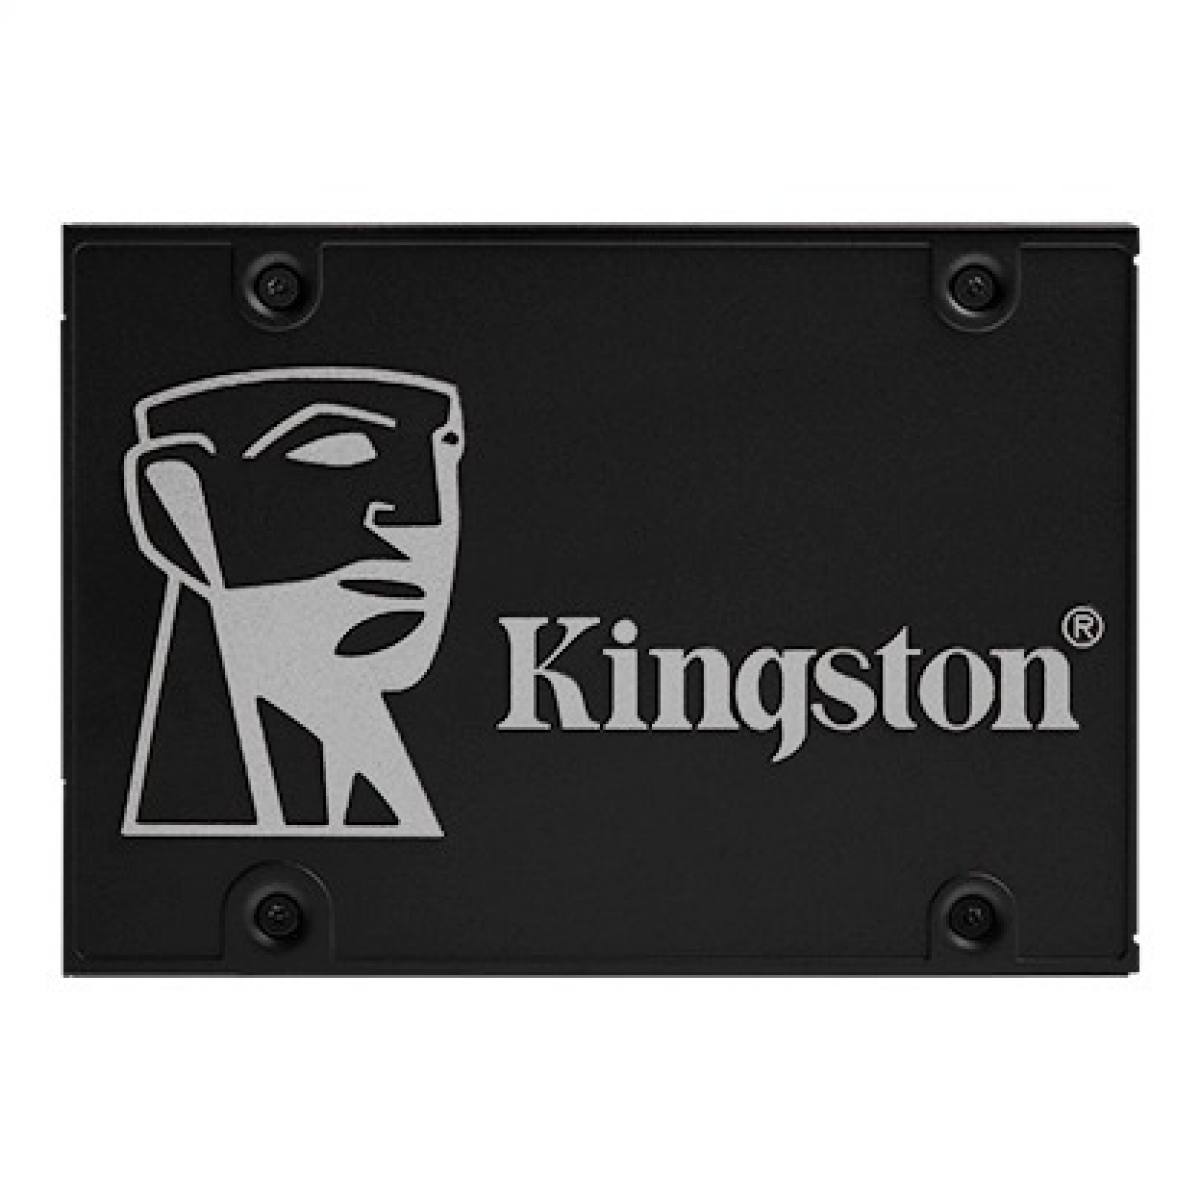 SSD Kingston SKC600 1024GB SATA